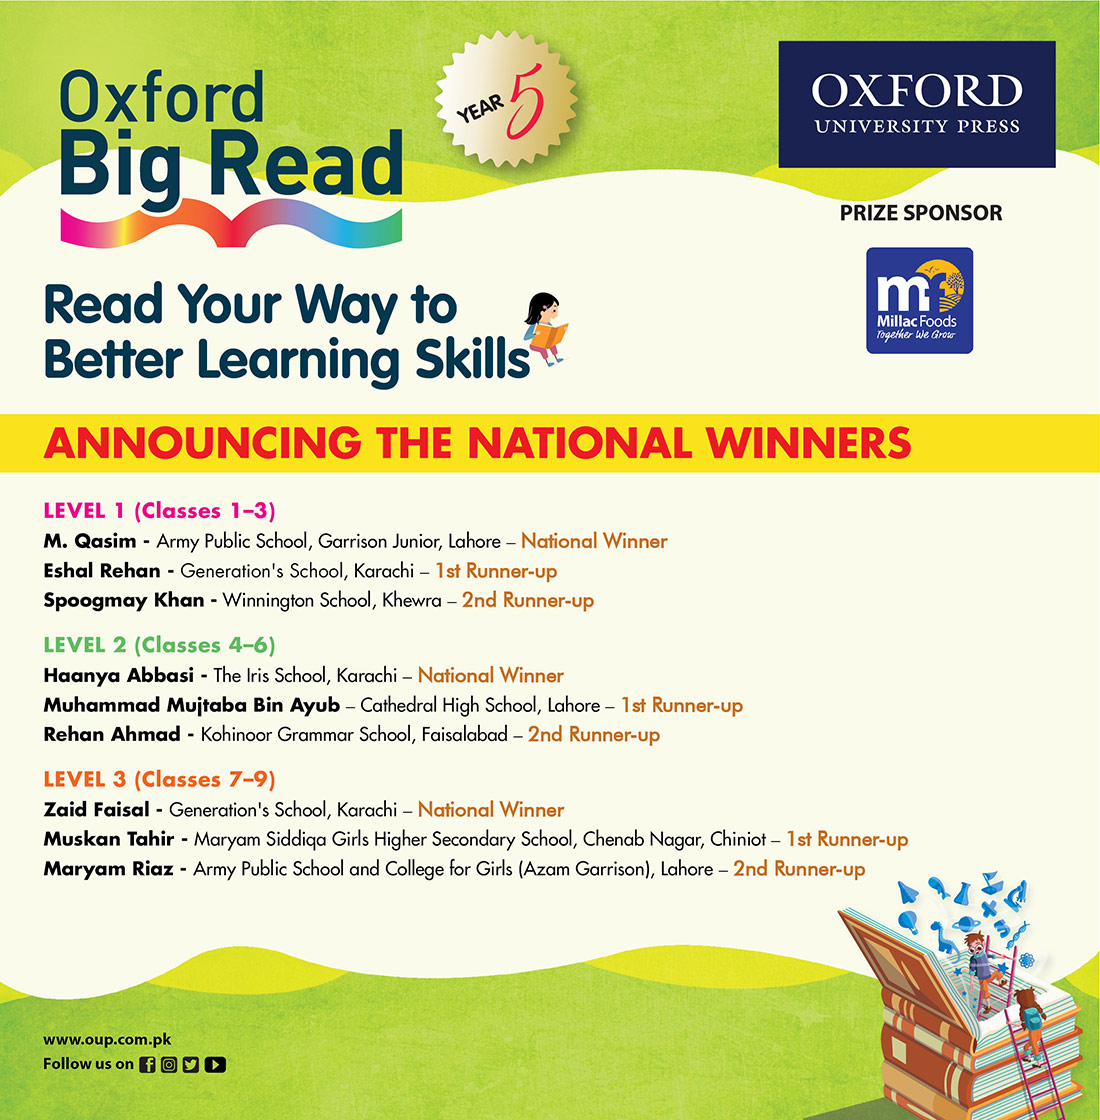 Oxford Big Read